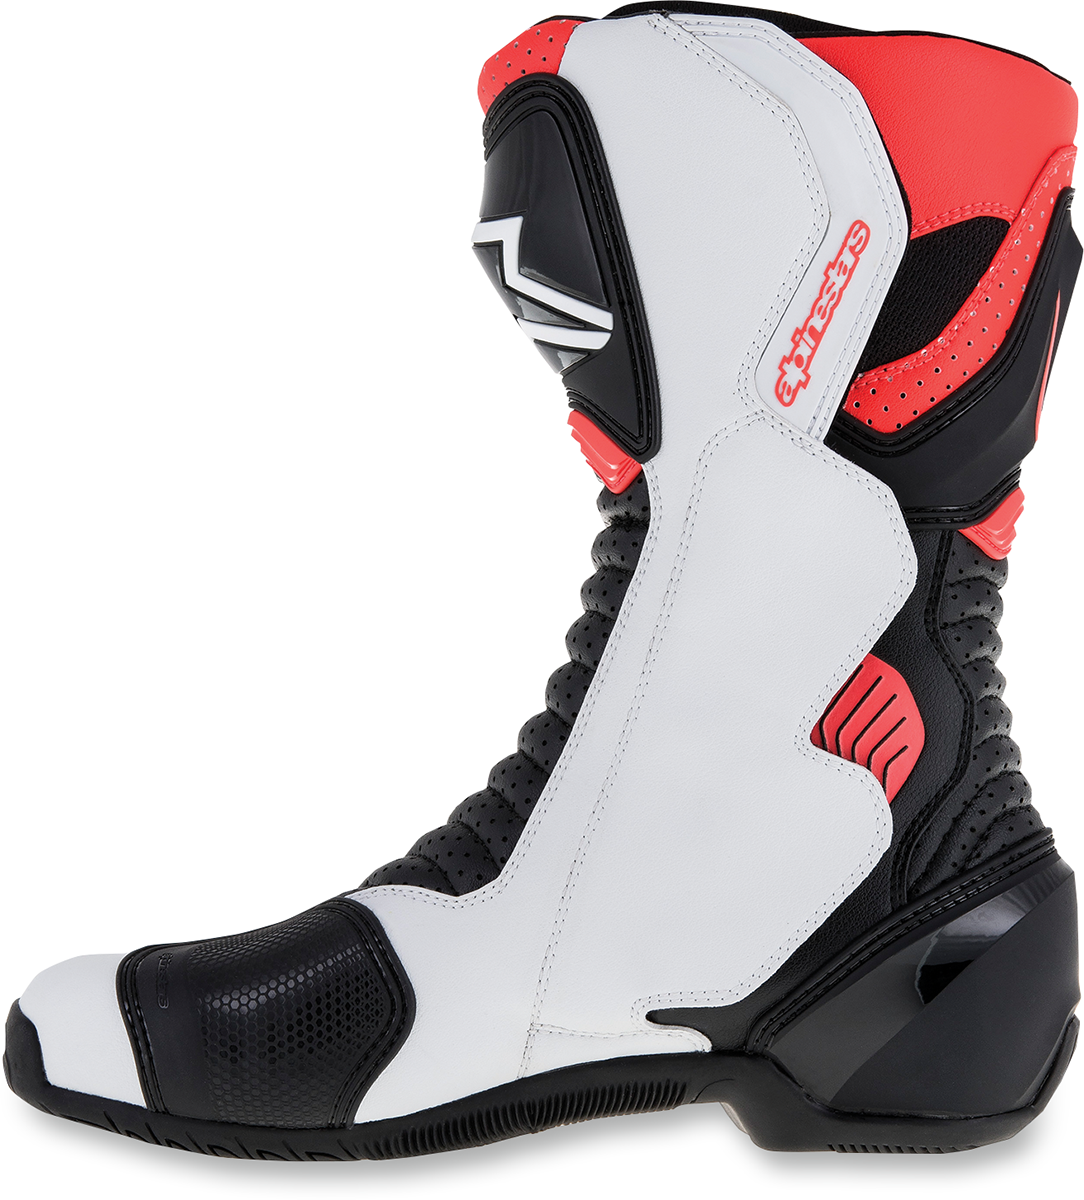 ALPINESTARS SMX-6 v2 Vented Boots - Black/White/Red Fluorescent - US 4 / EU 37 2223017-1320-37